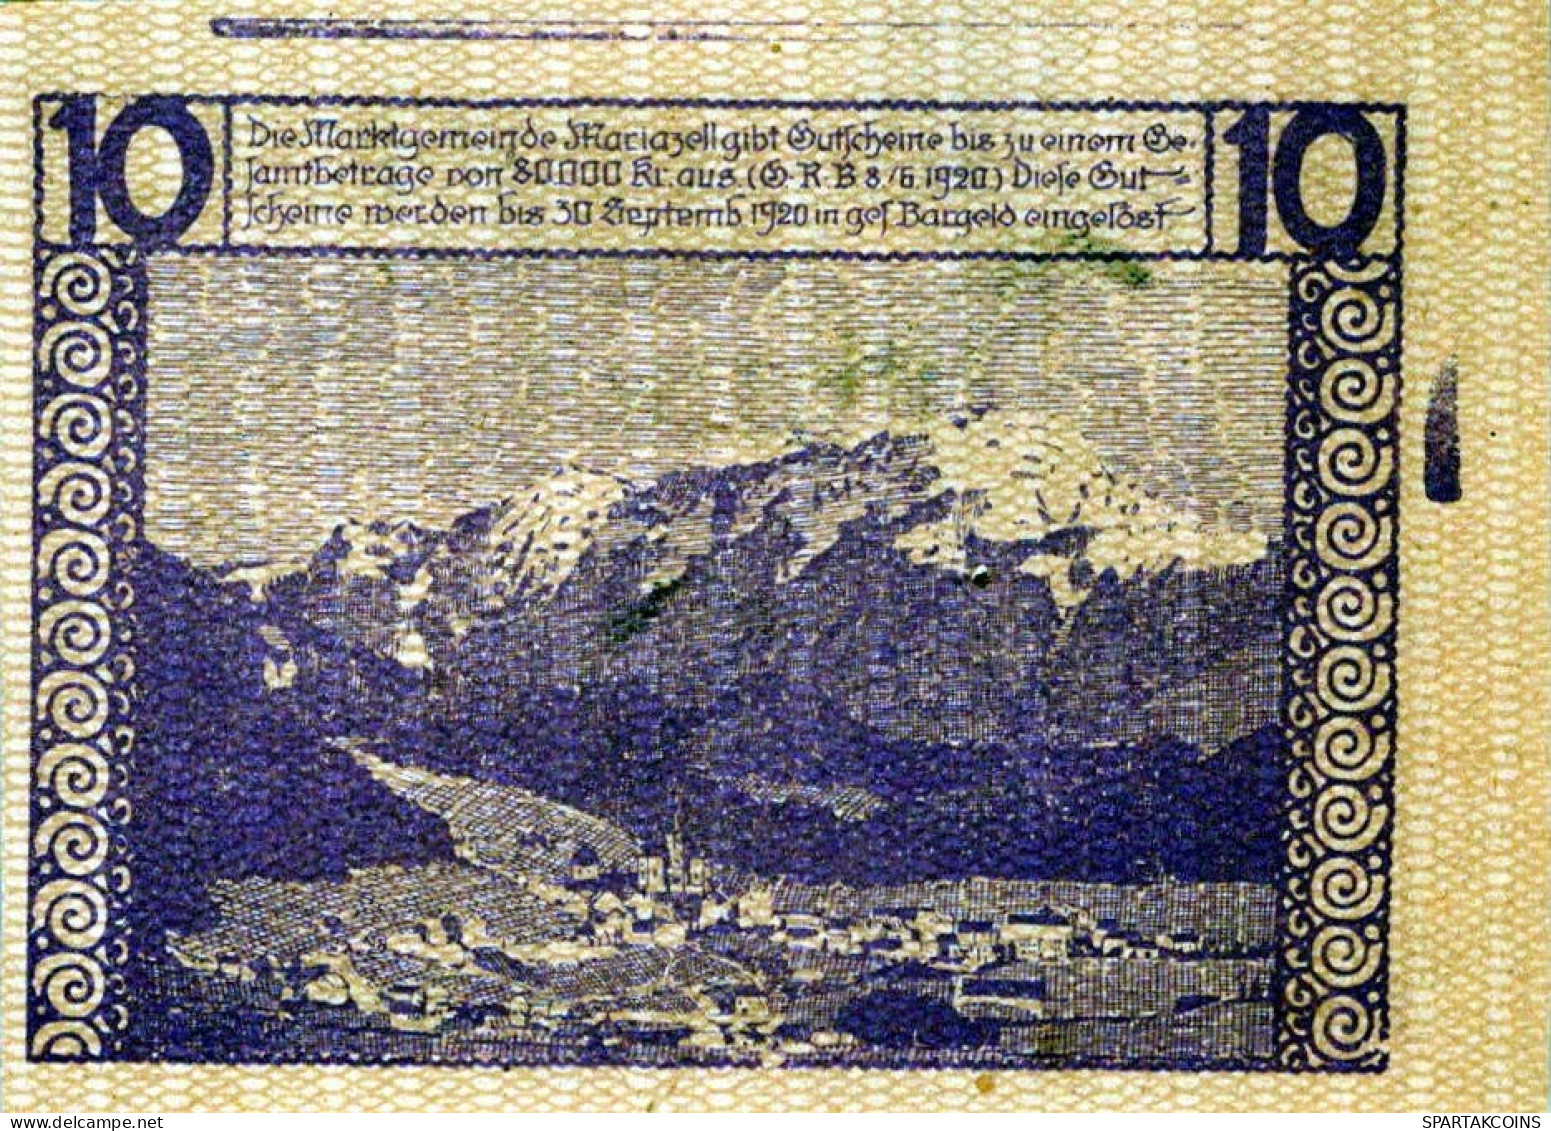 10 HELLER 1920 Stadt MARIAZELL Styria Österreich Notgeld Banknote #PD849 - [11] Local Banknote Issues